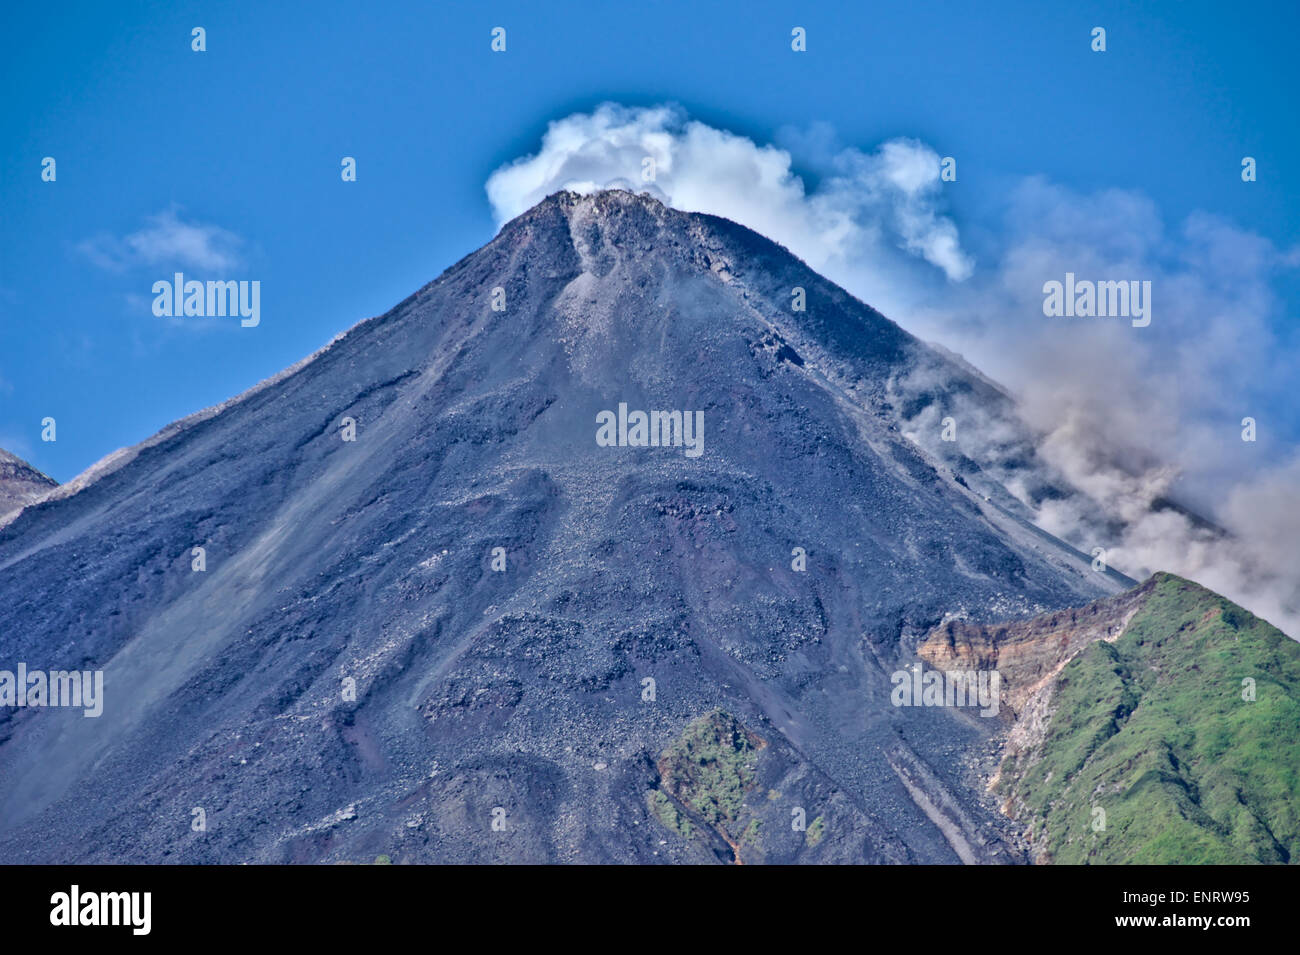 Karangetang Vulkan, Siau, Indonesien, 1827 Meter hoch, durchbrechenden 8. Mai 2015, spuckt Lava, Asche und Gas, 454 Menschen. Stockfoto